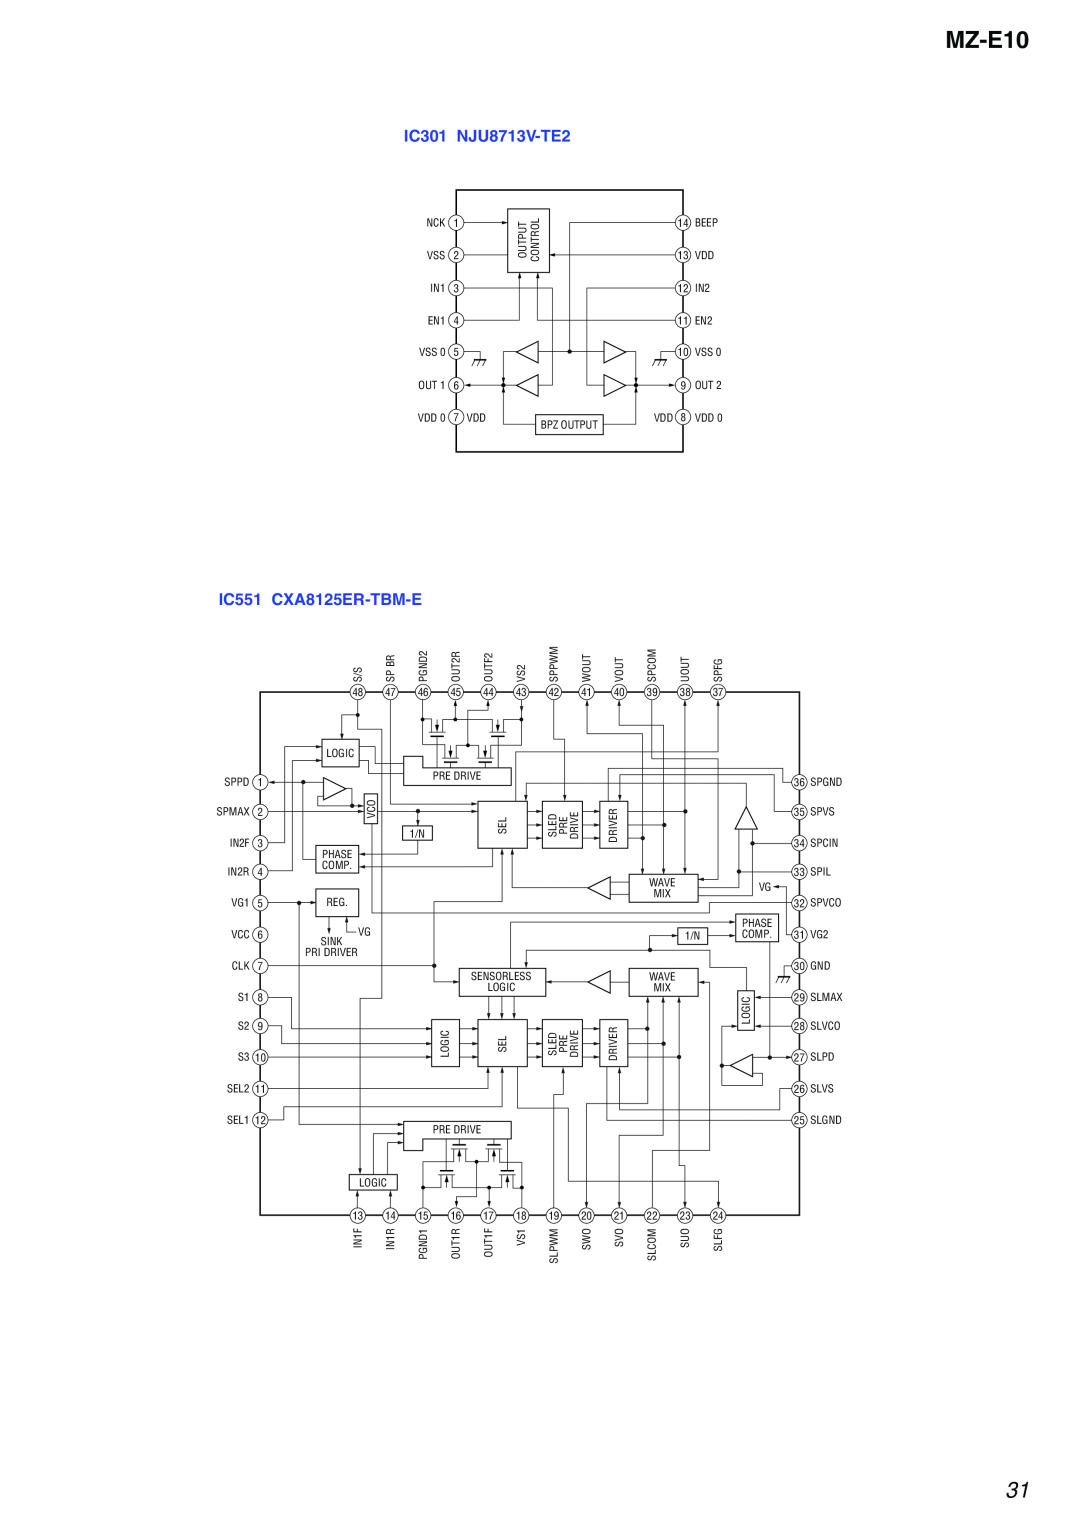 Sony MZ-E10 service manual IC301 NJU8713V-TE2, IC551 CXA8125ER-TBM-E 